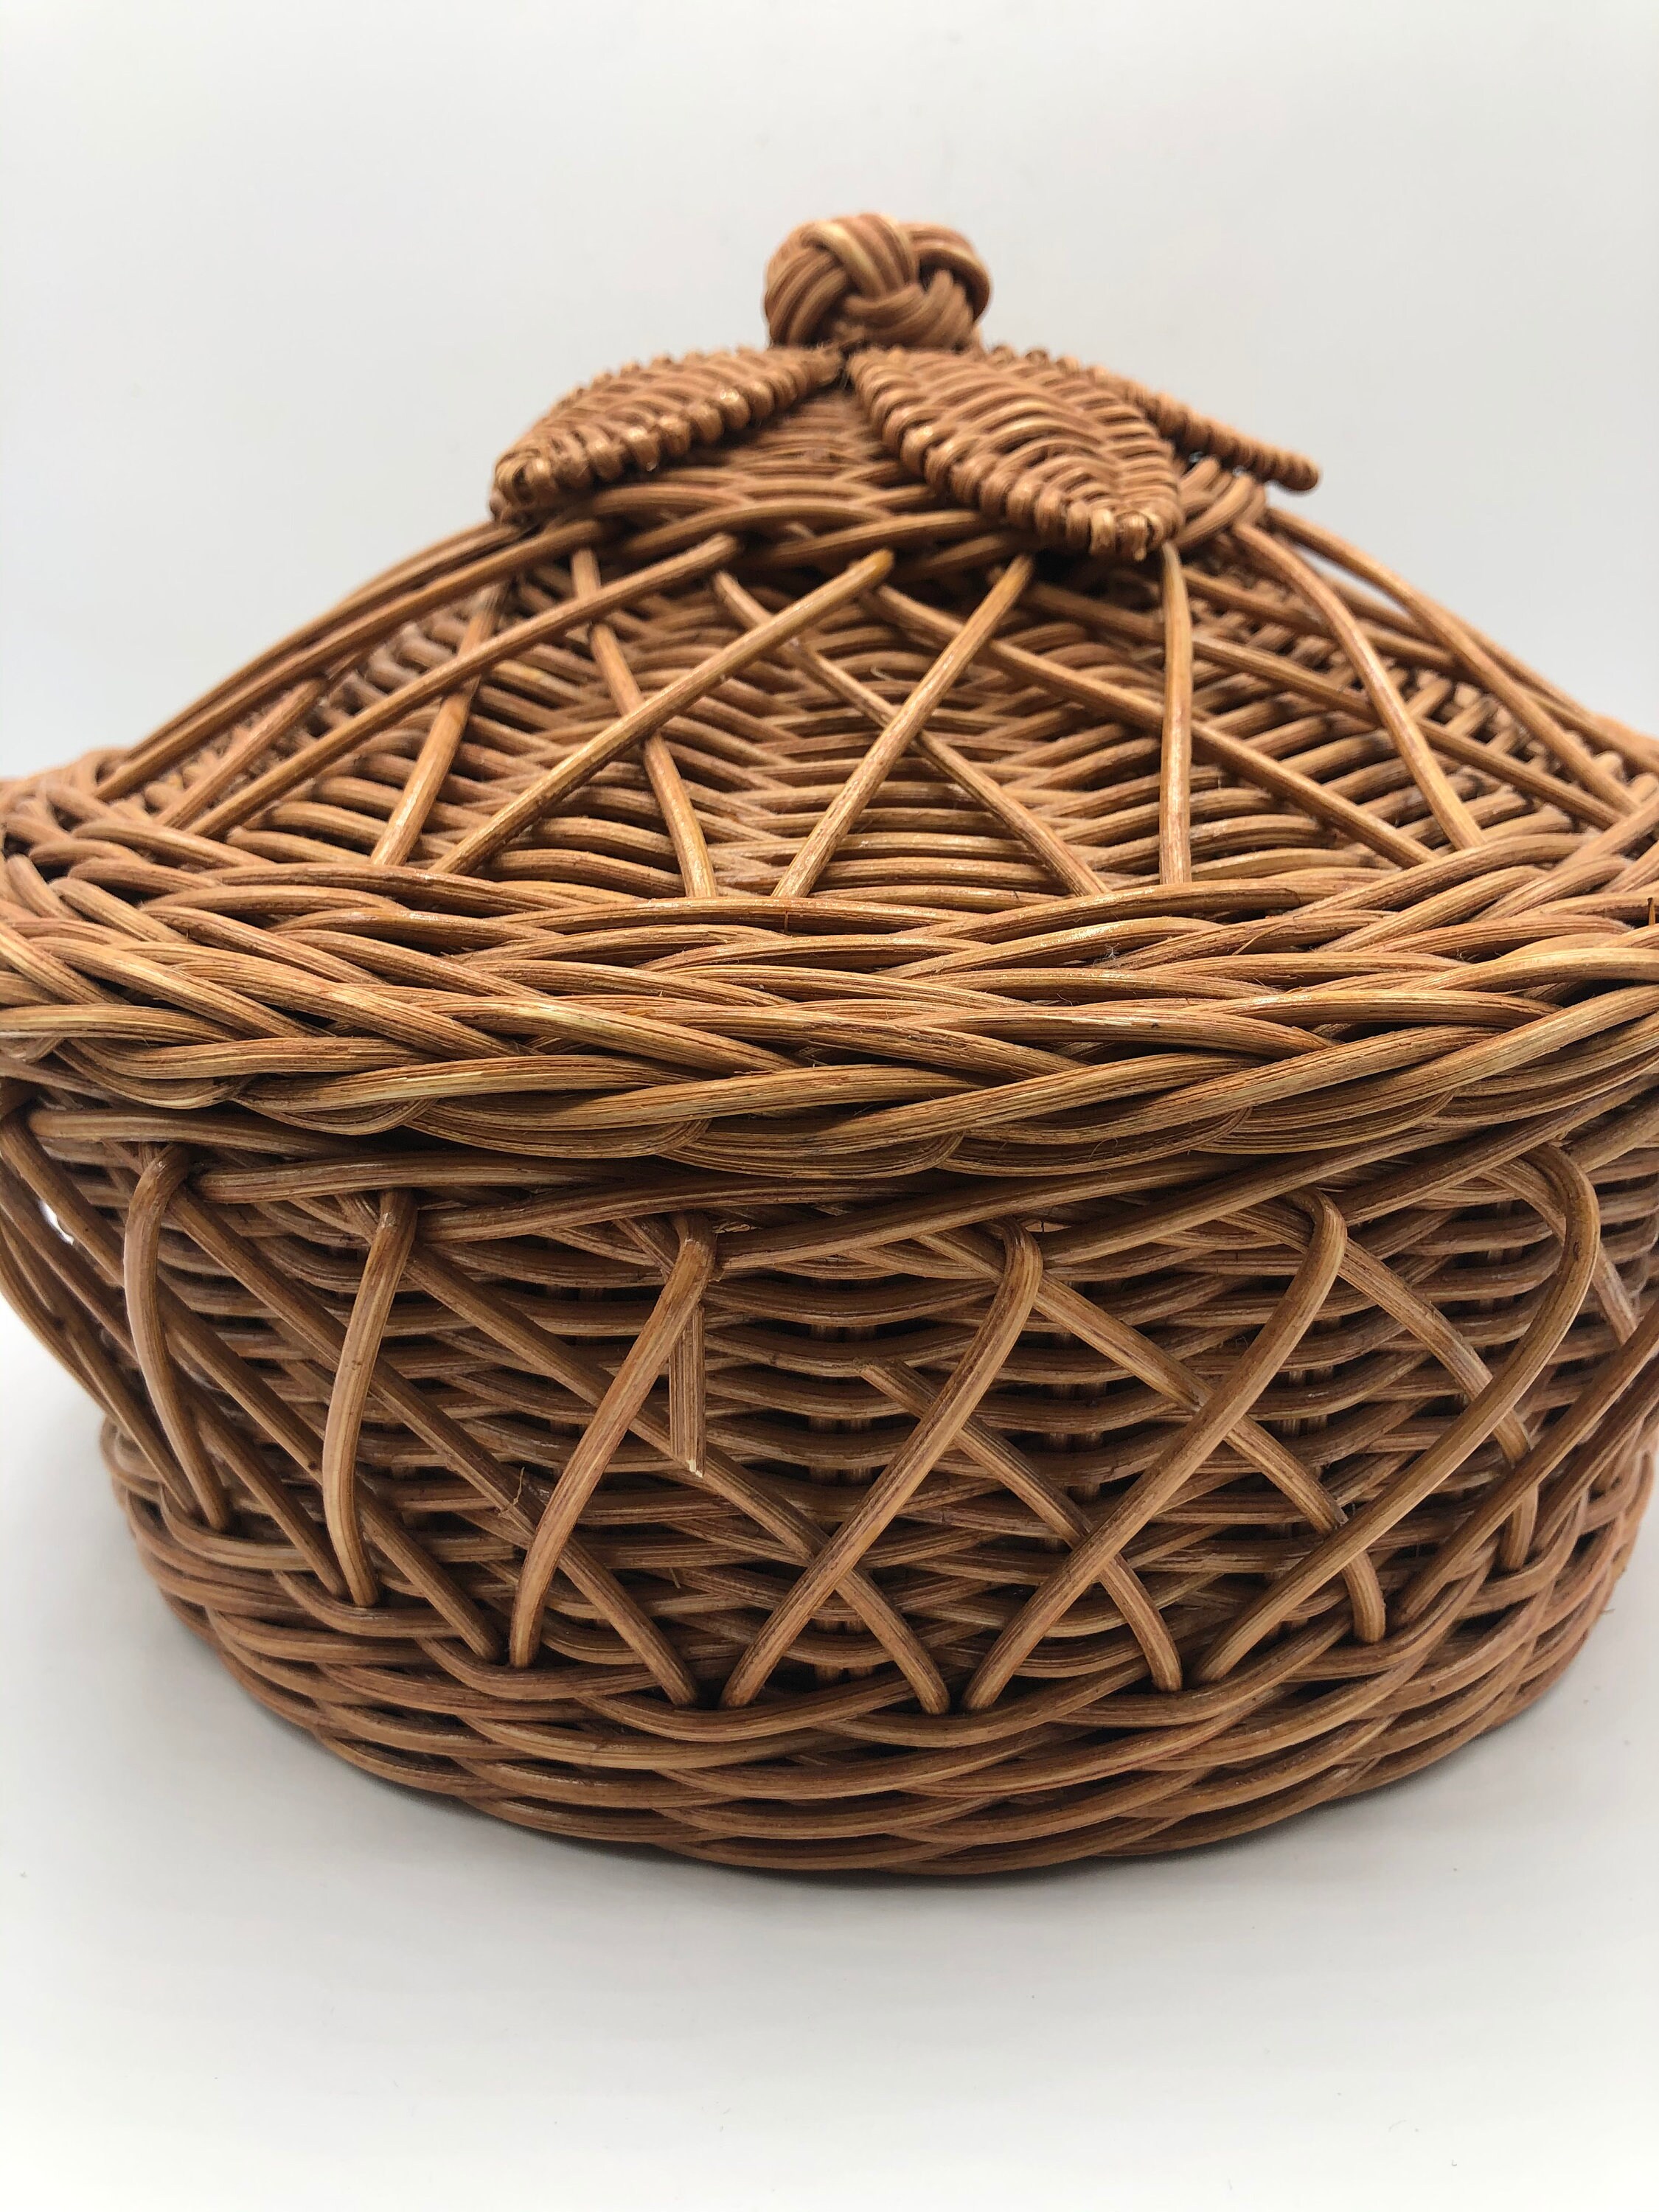 Covered Basket Vintage Decorative Basket Farmhouse Rustic | Etsy